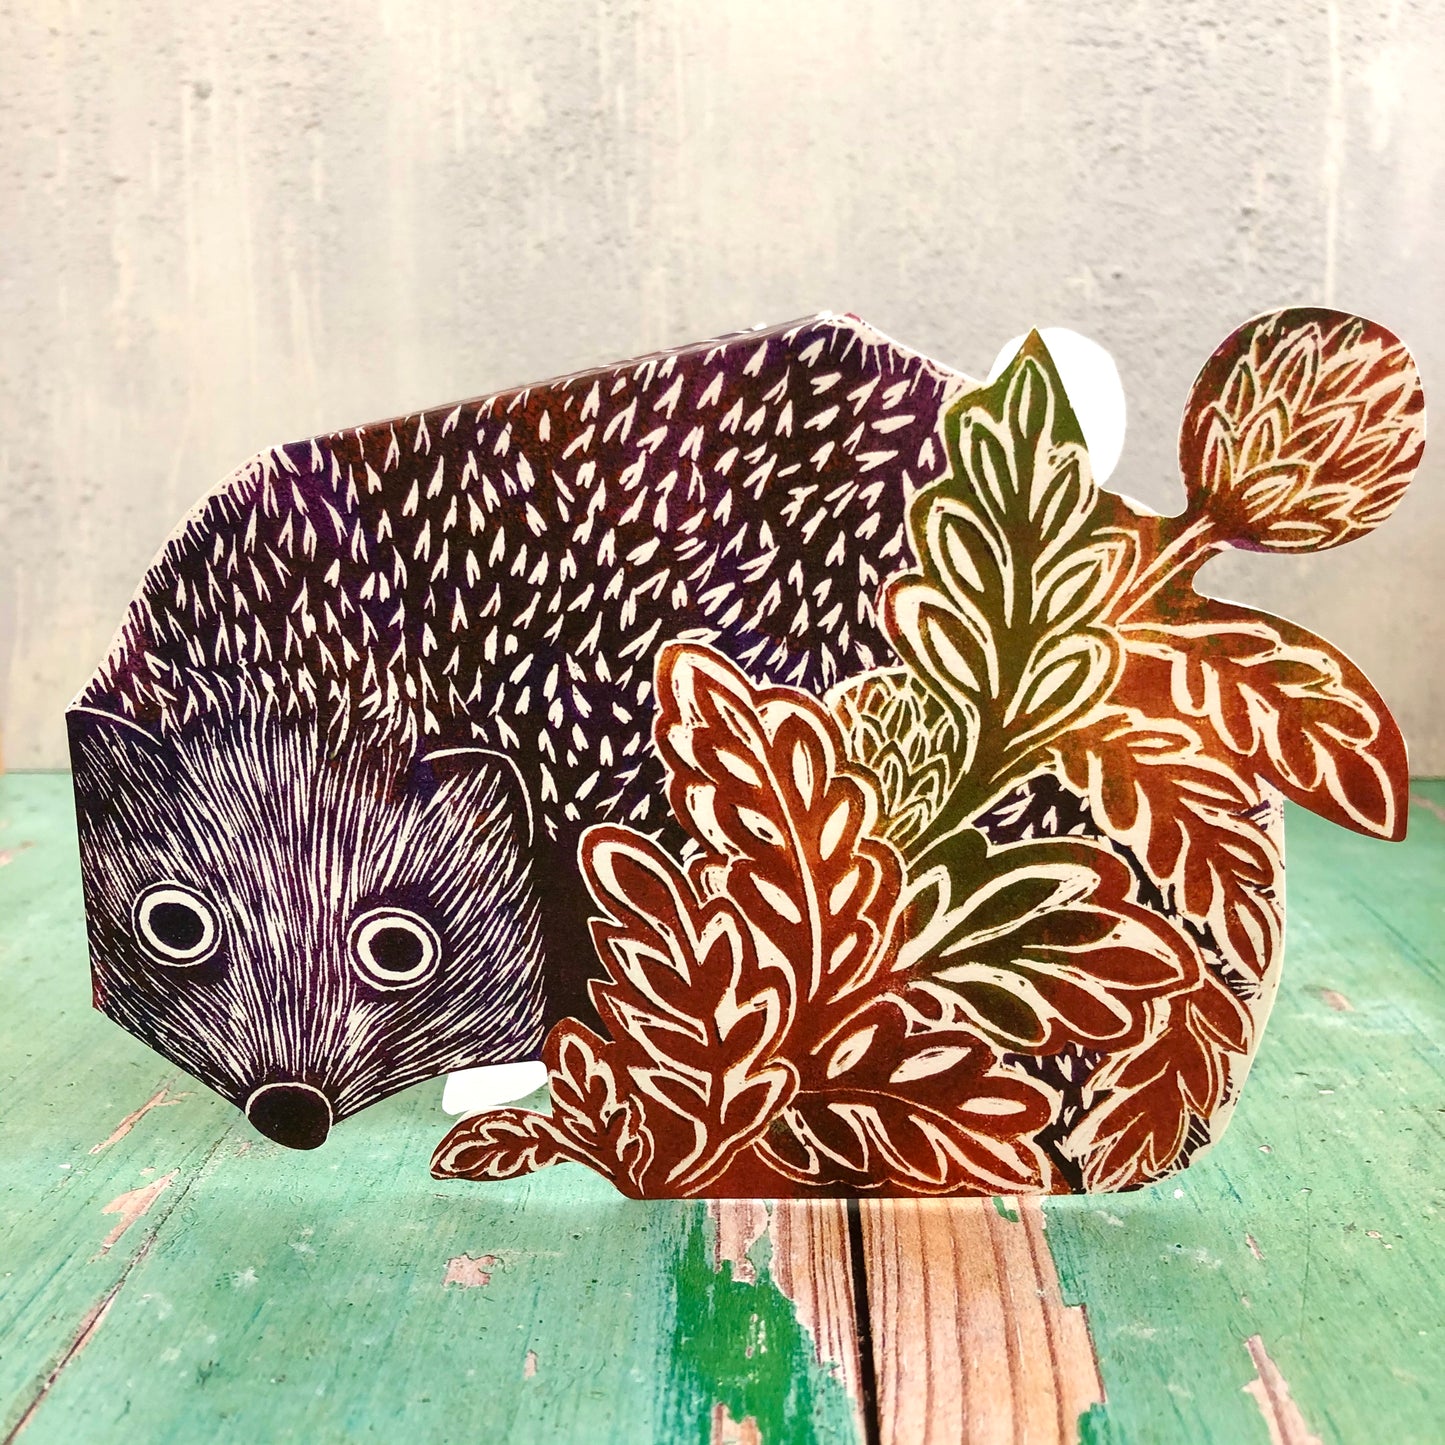 3D Hedgehog by Printmaker Judy Lumley